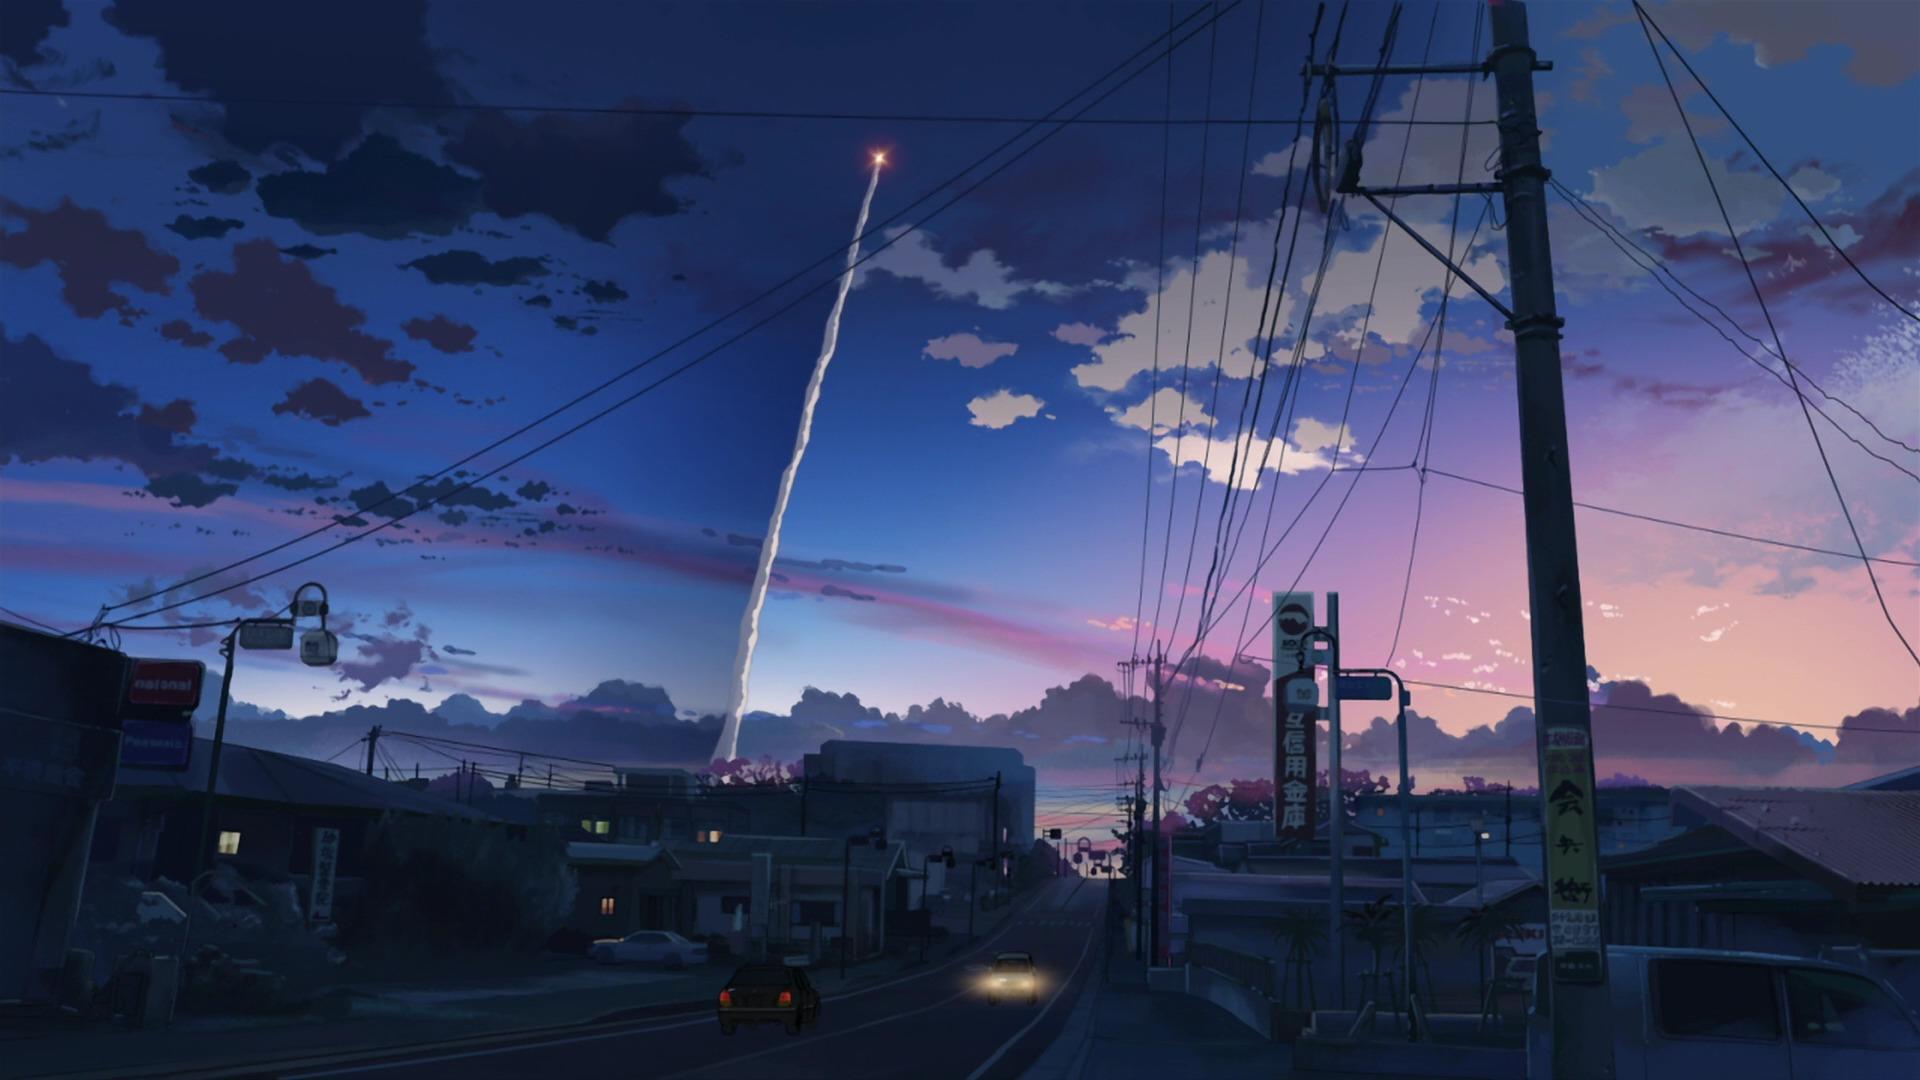 theme anime: Anime City Background HD